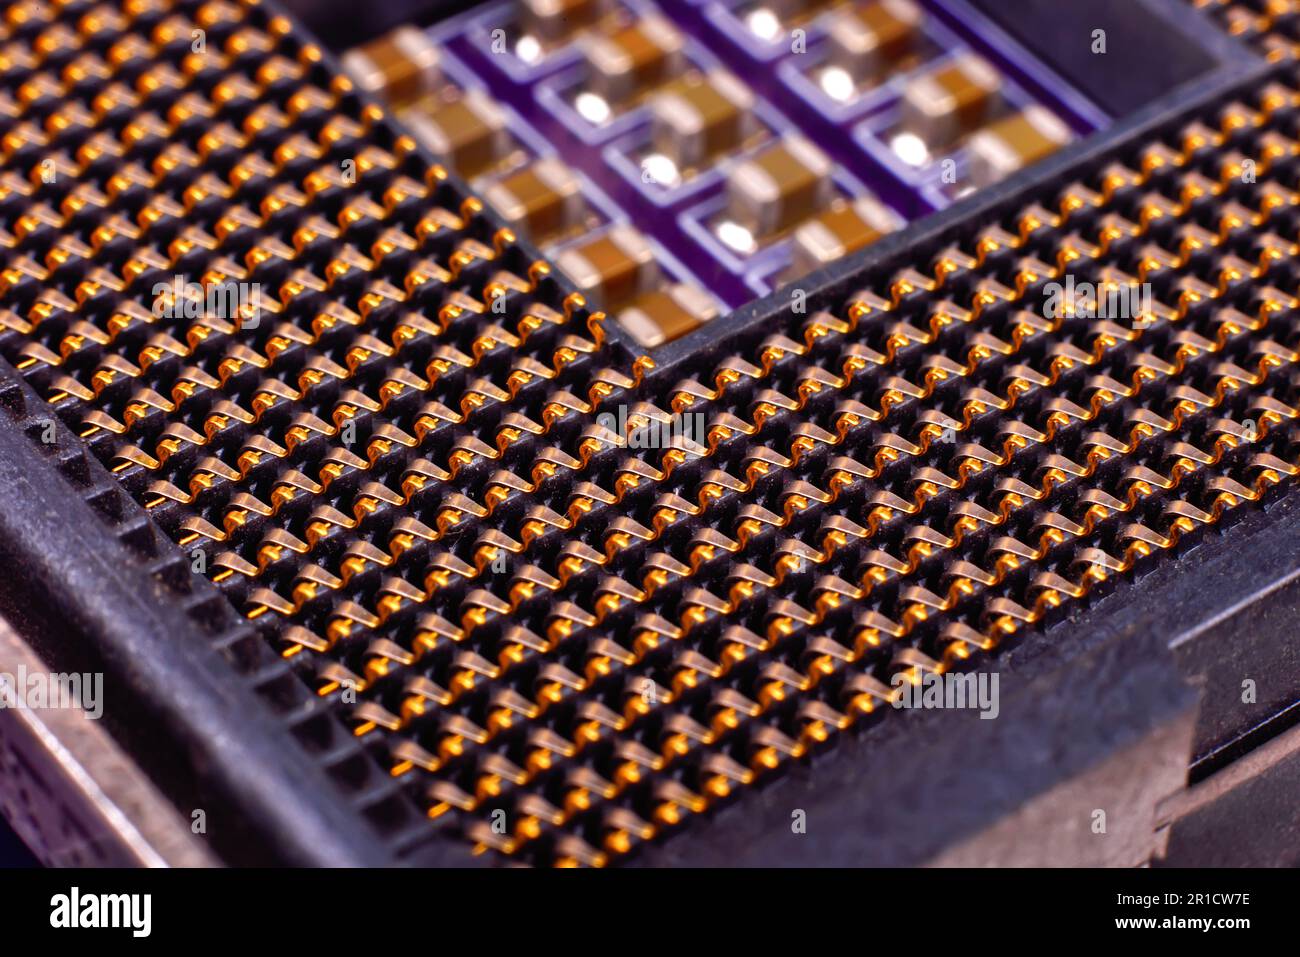 Empty CPU socket, extra close up Stock Photo